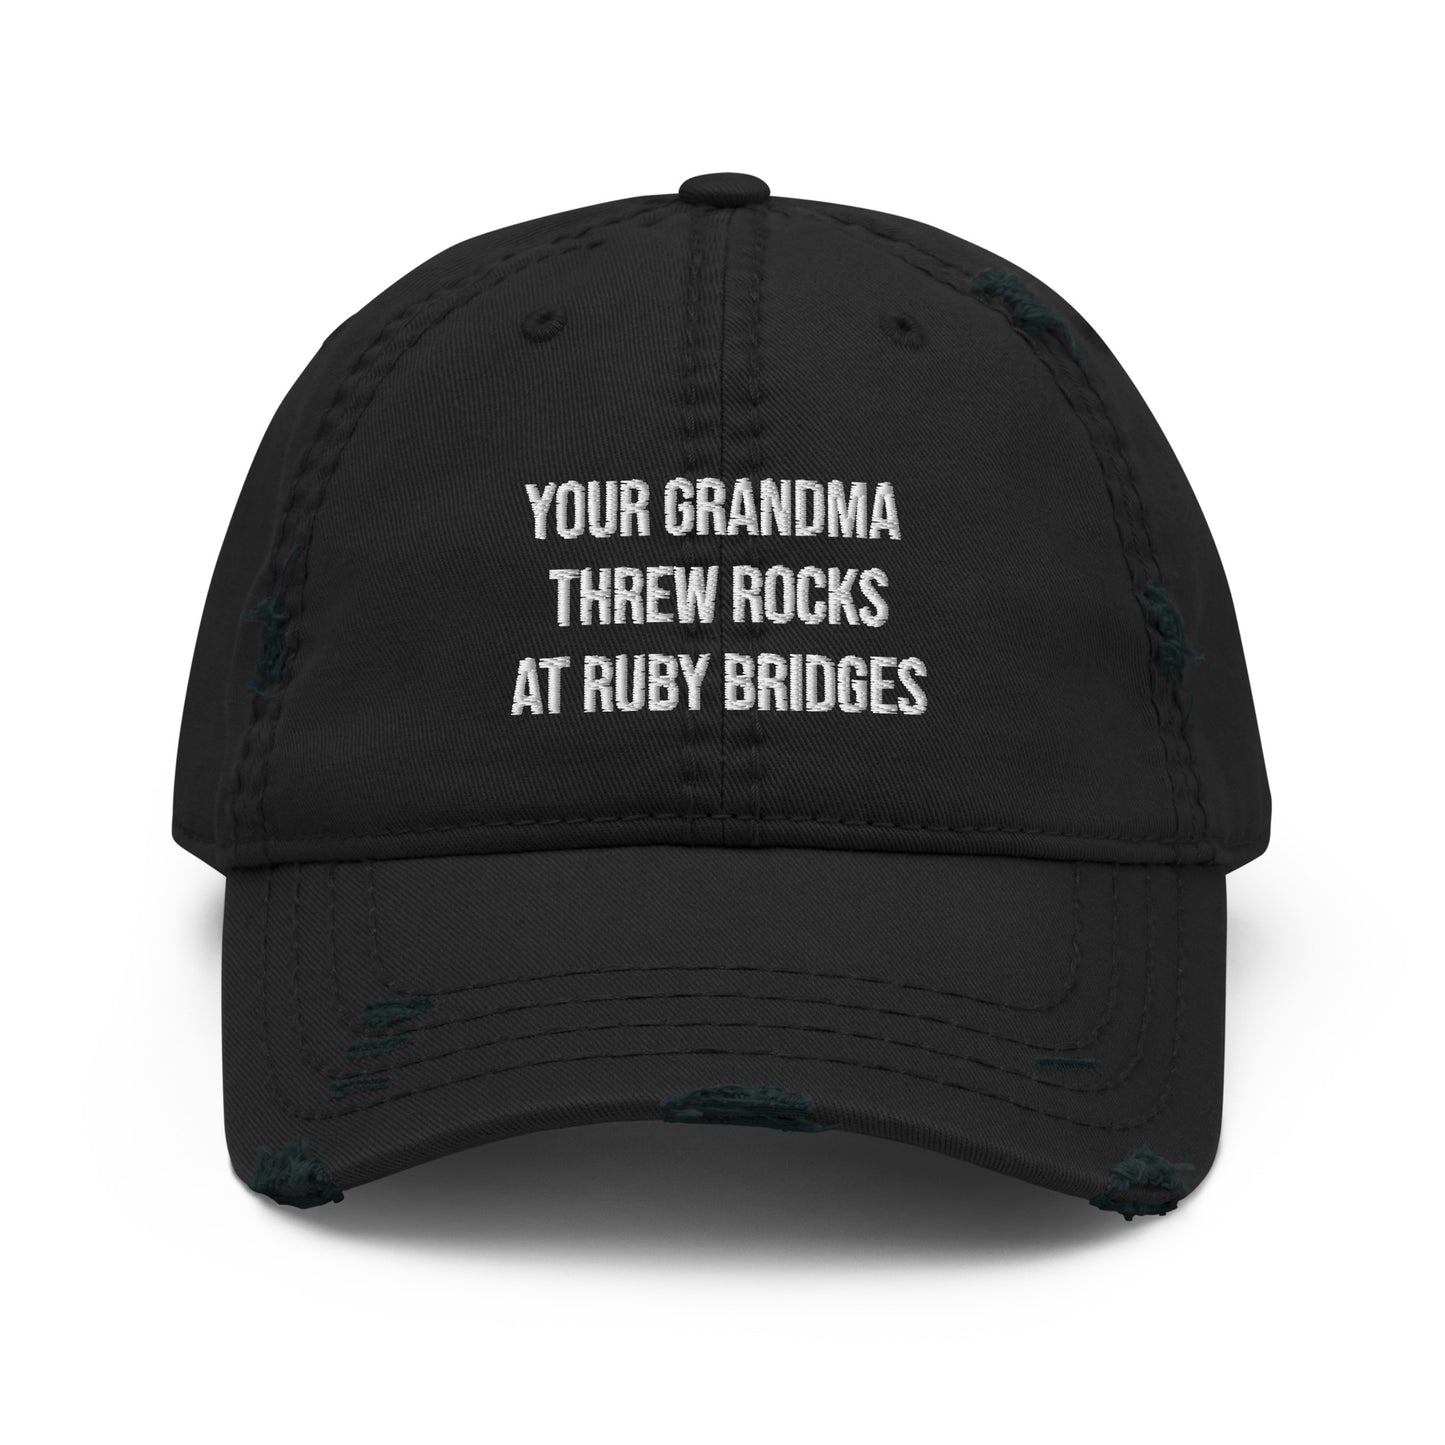 Your Grandma Threw Rocks At Ruby Bridges Distressed Hat